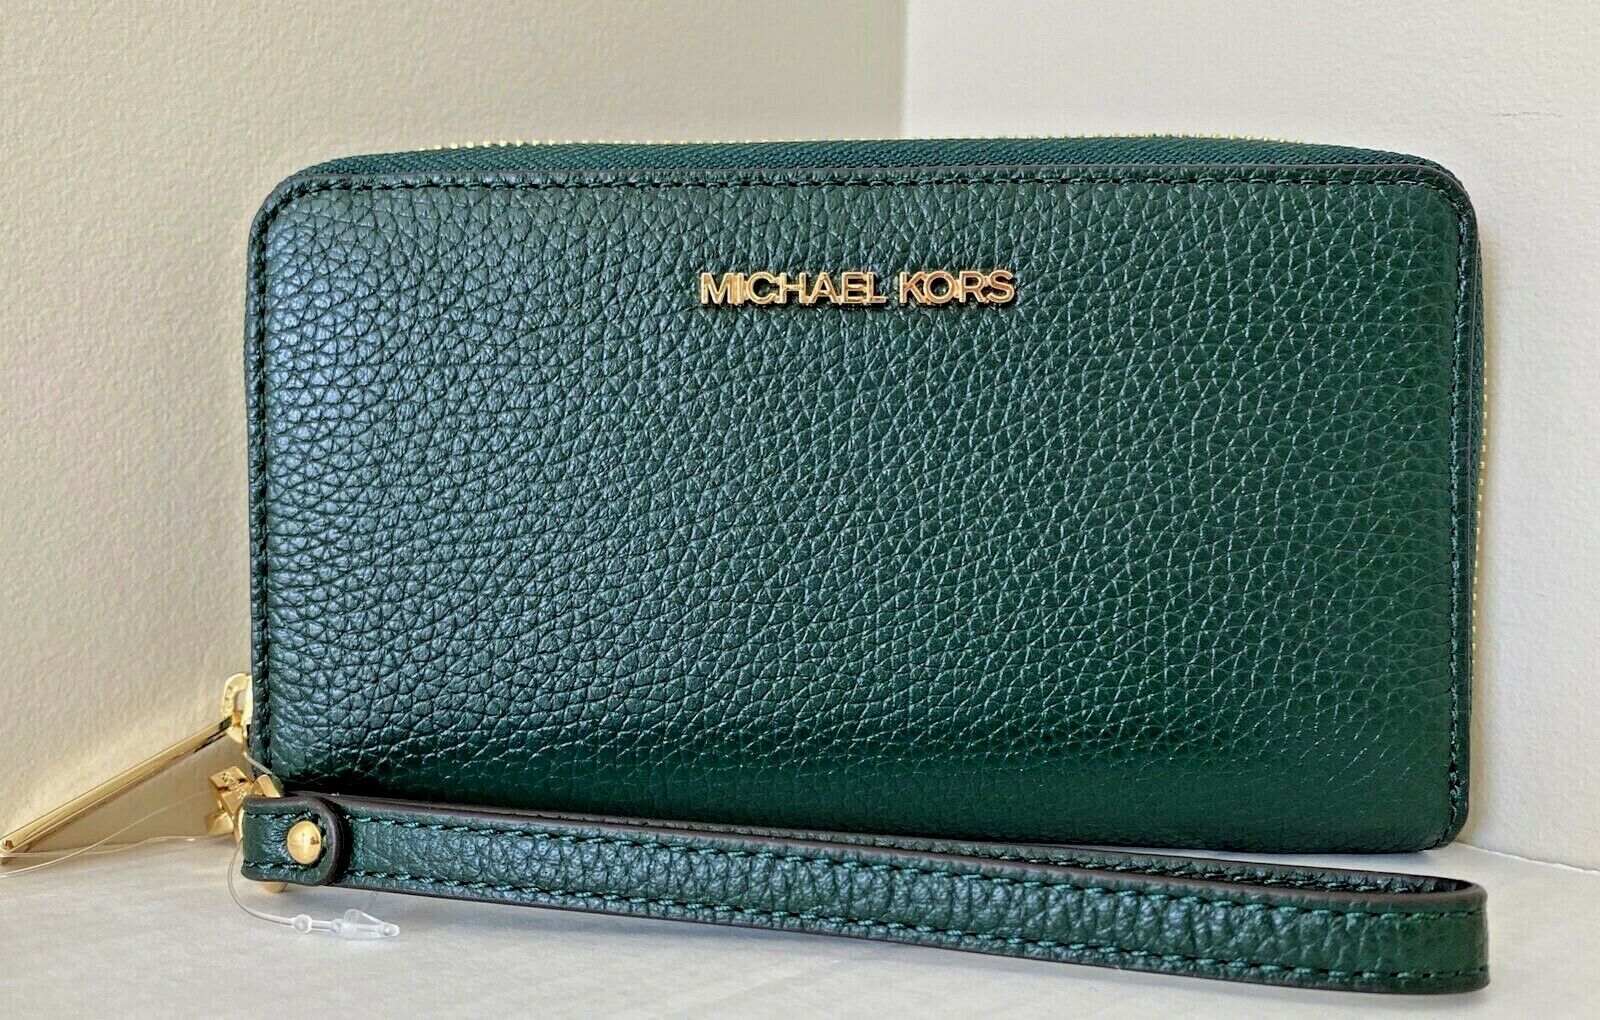 New Michael Kors jet set travel large flat phone case wallet racing green